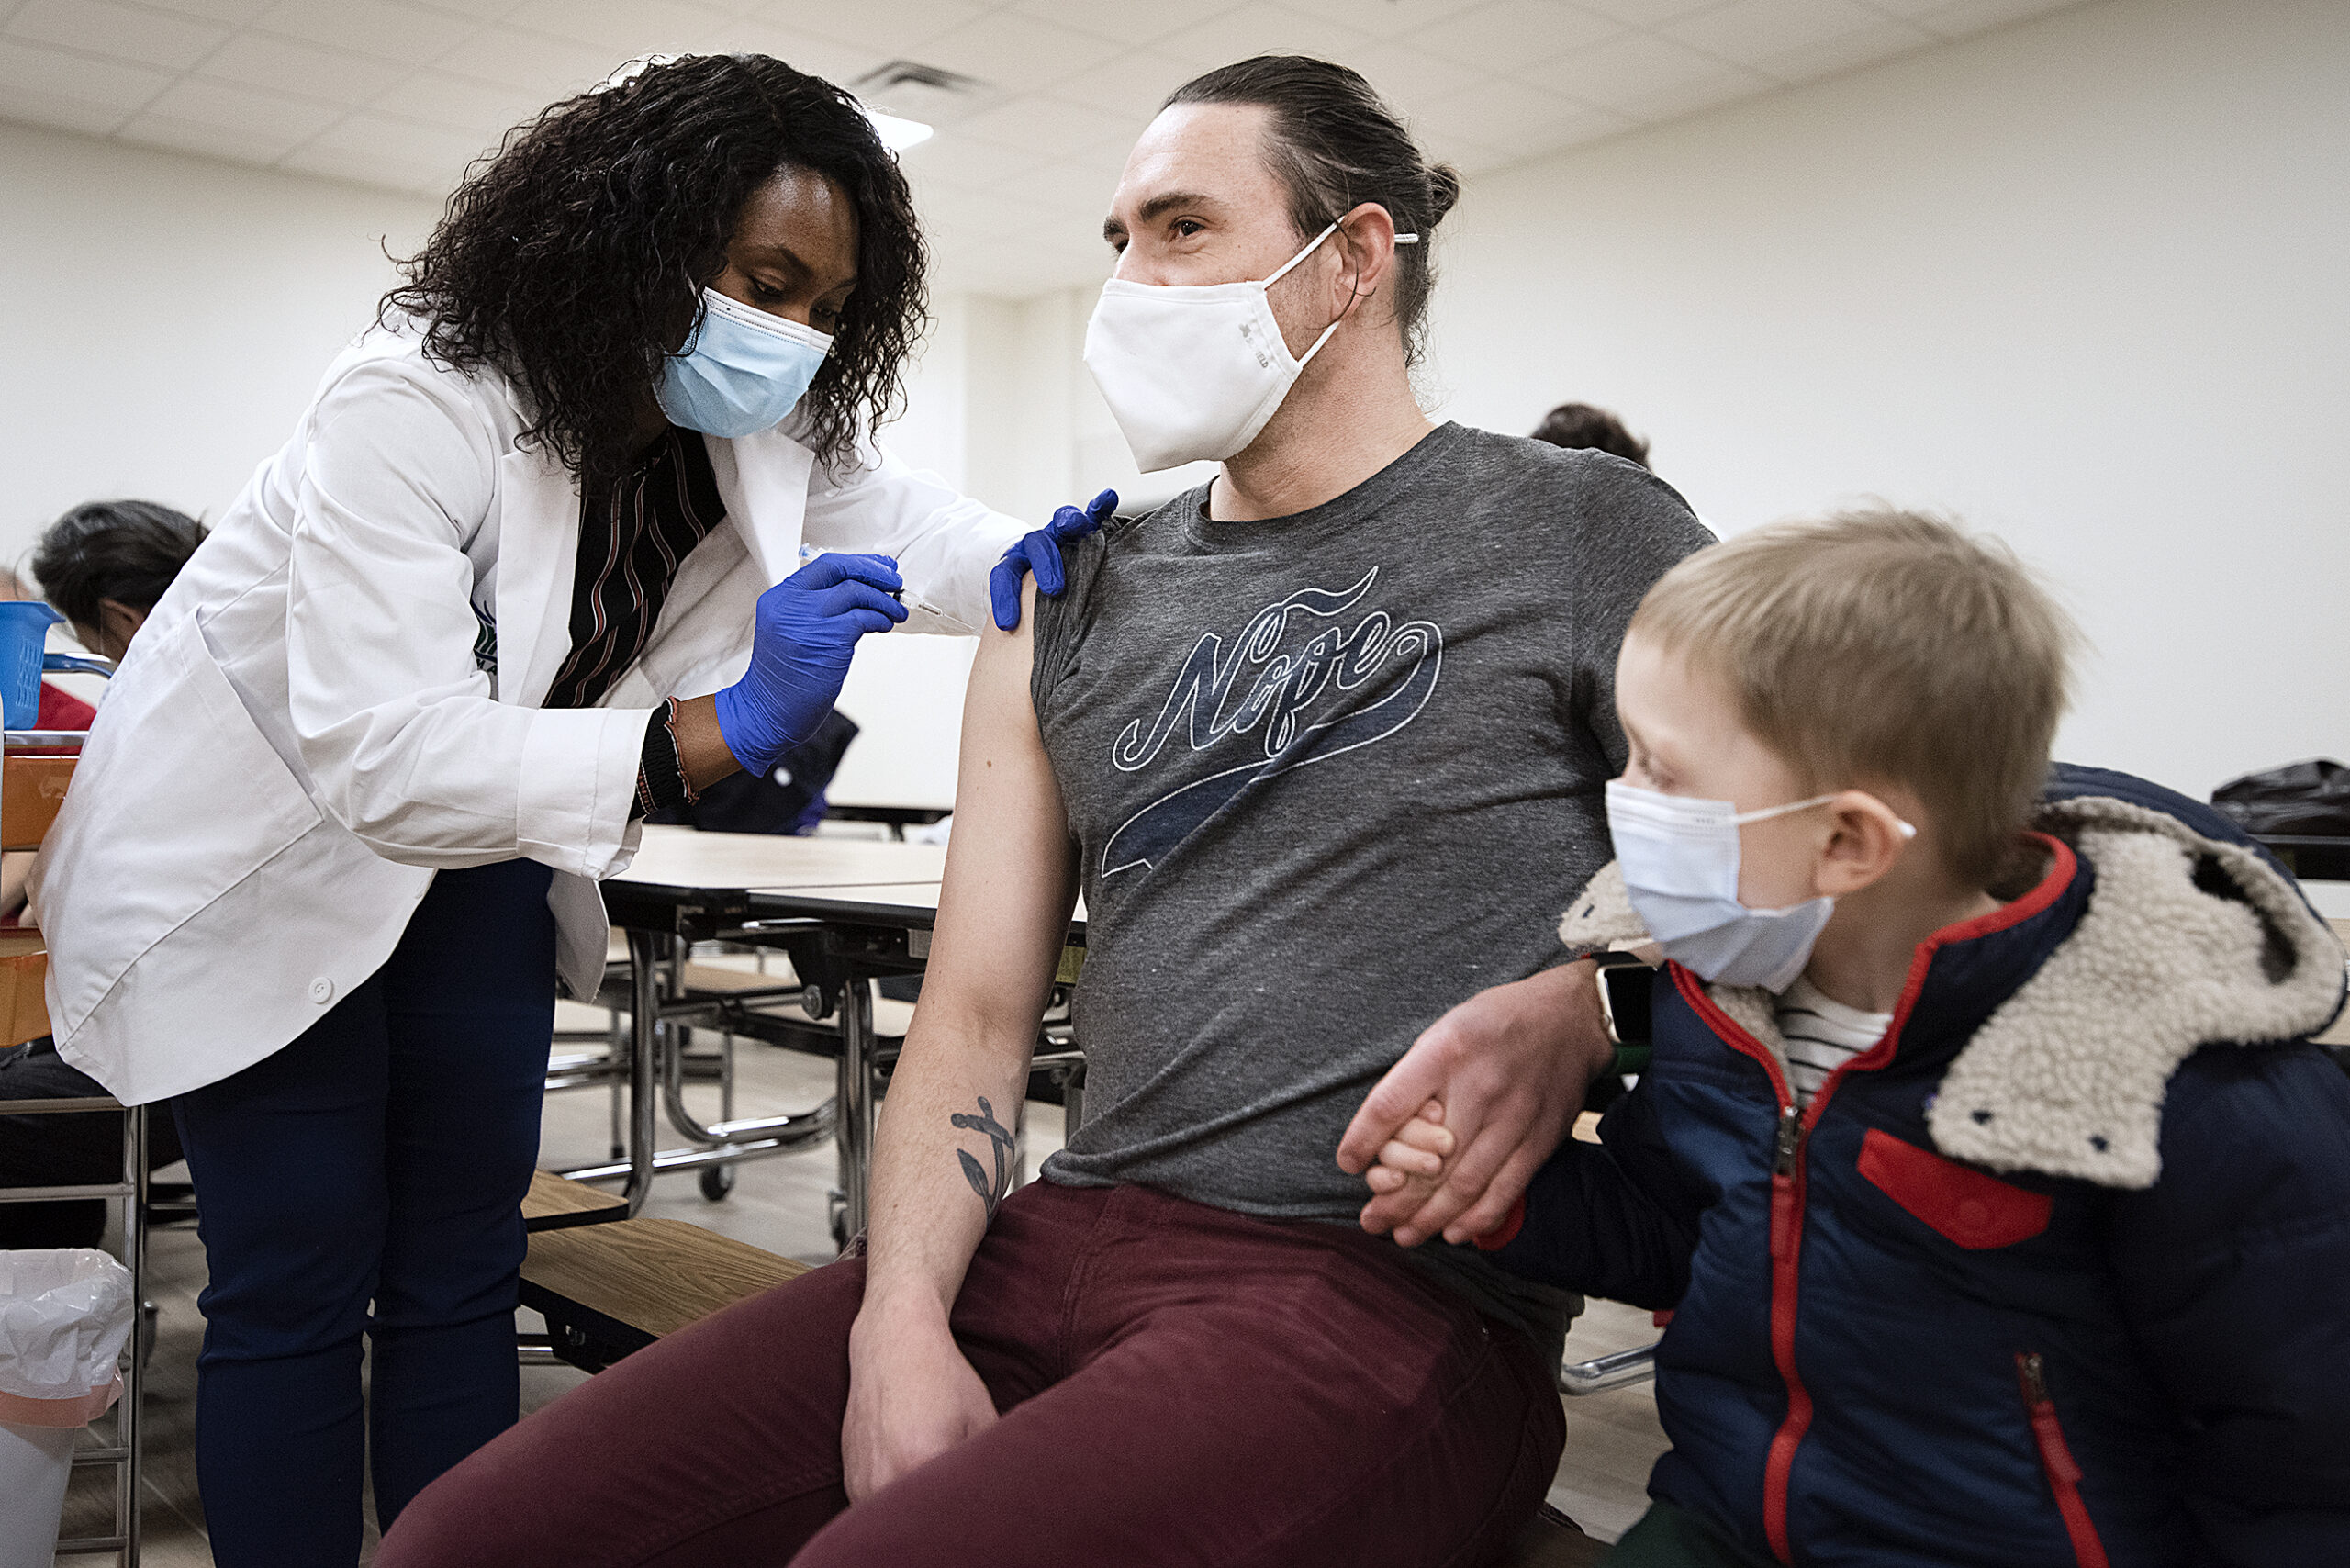 A man gets a Covid vaccine